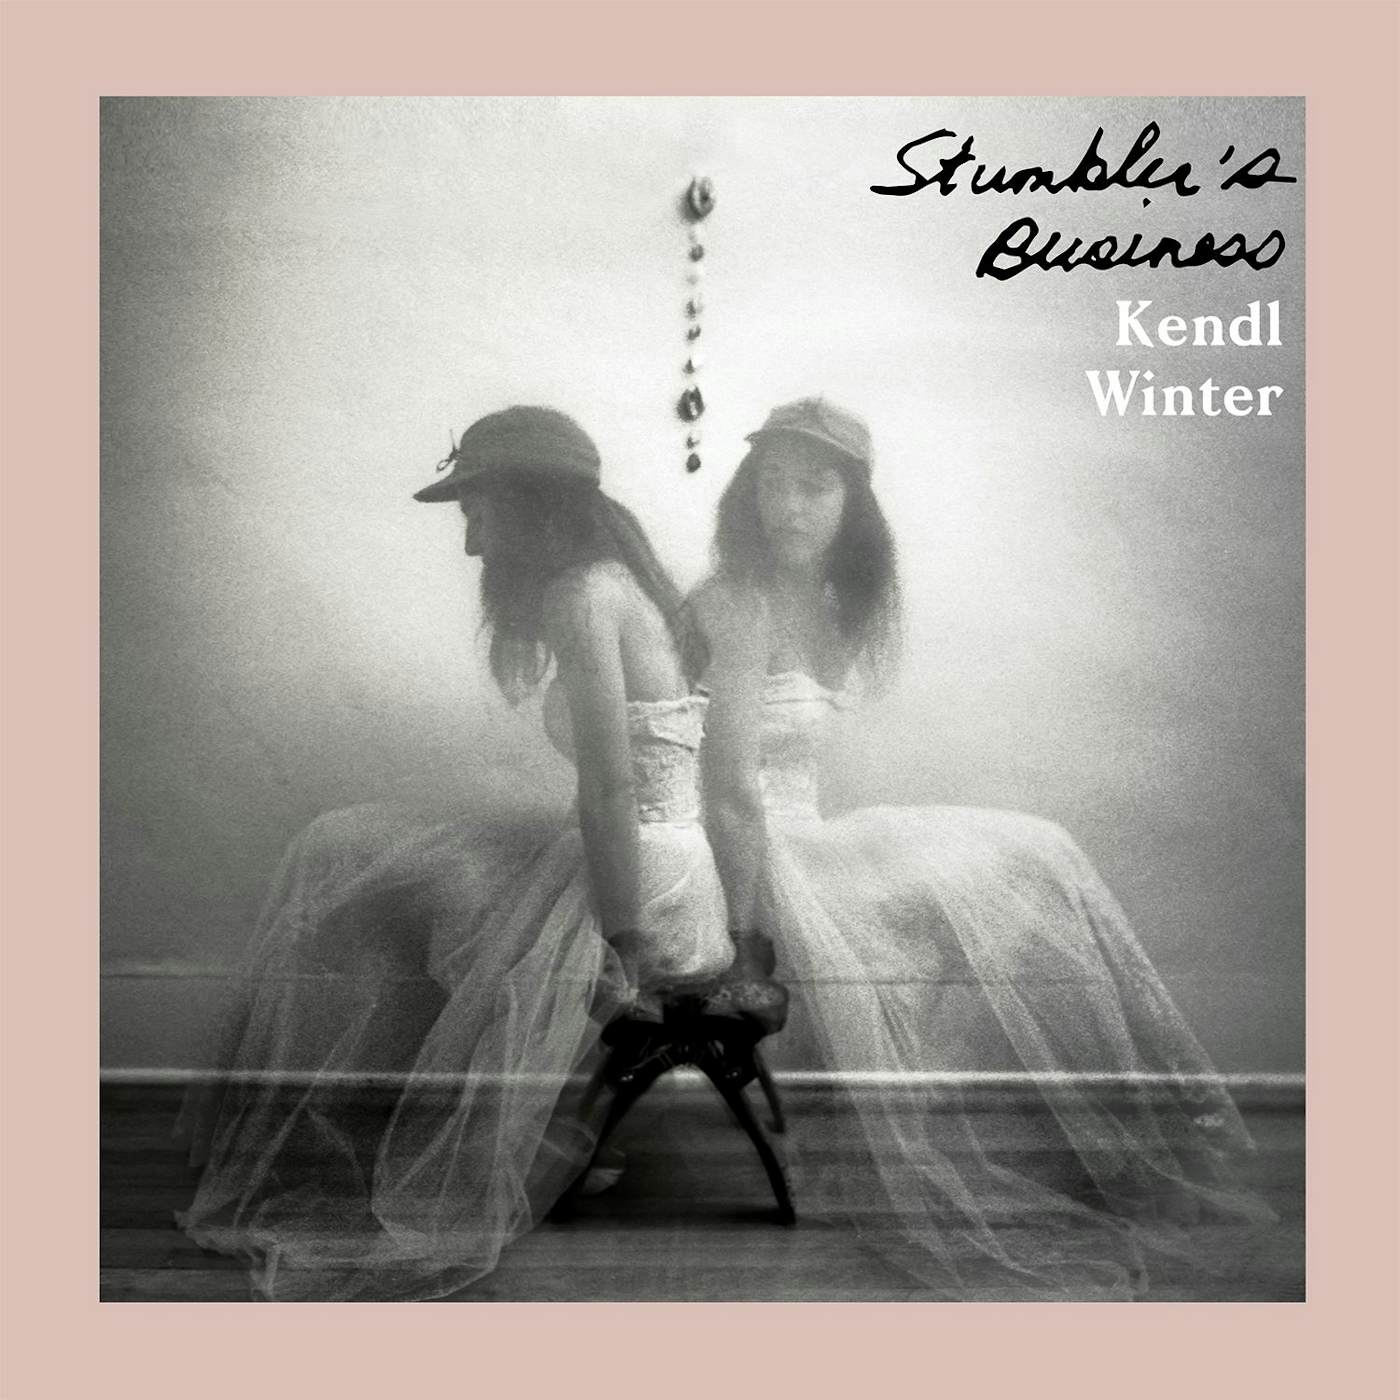 Kendl Winter STUMBLER'S BUSINESS CD